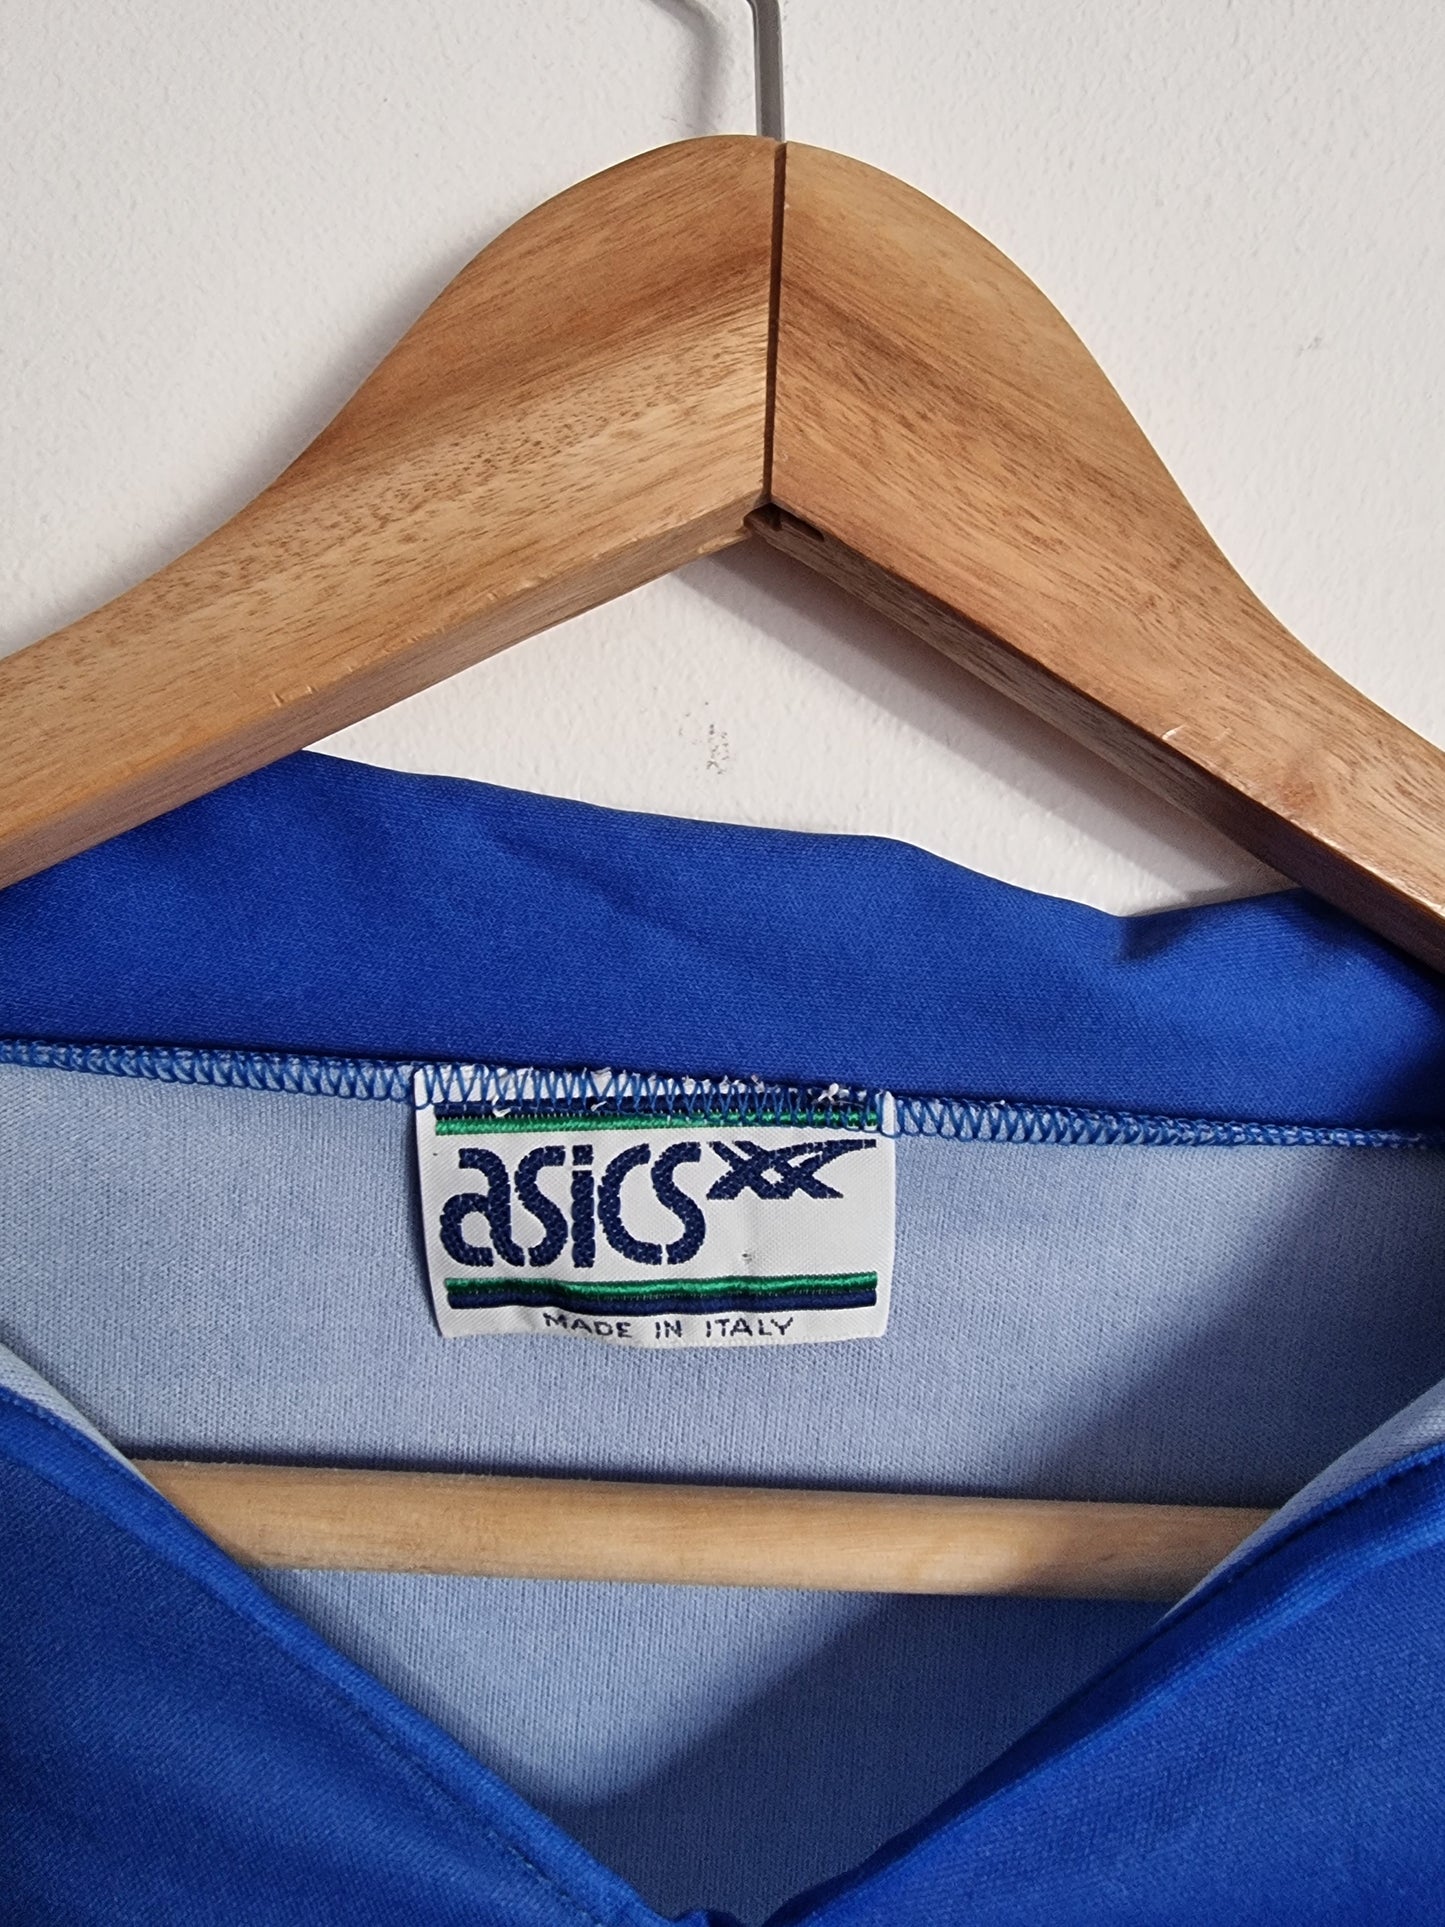 Asics Sampdoria 90/91 Long Sleeve Home Shirt XL